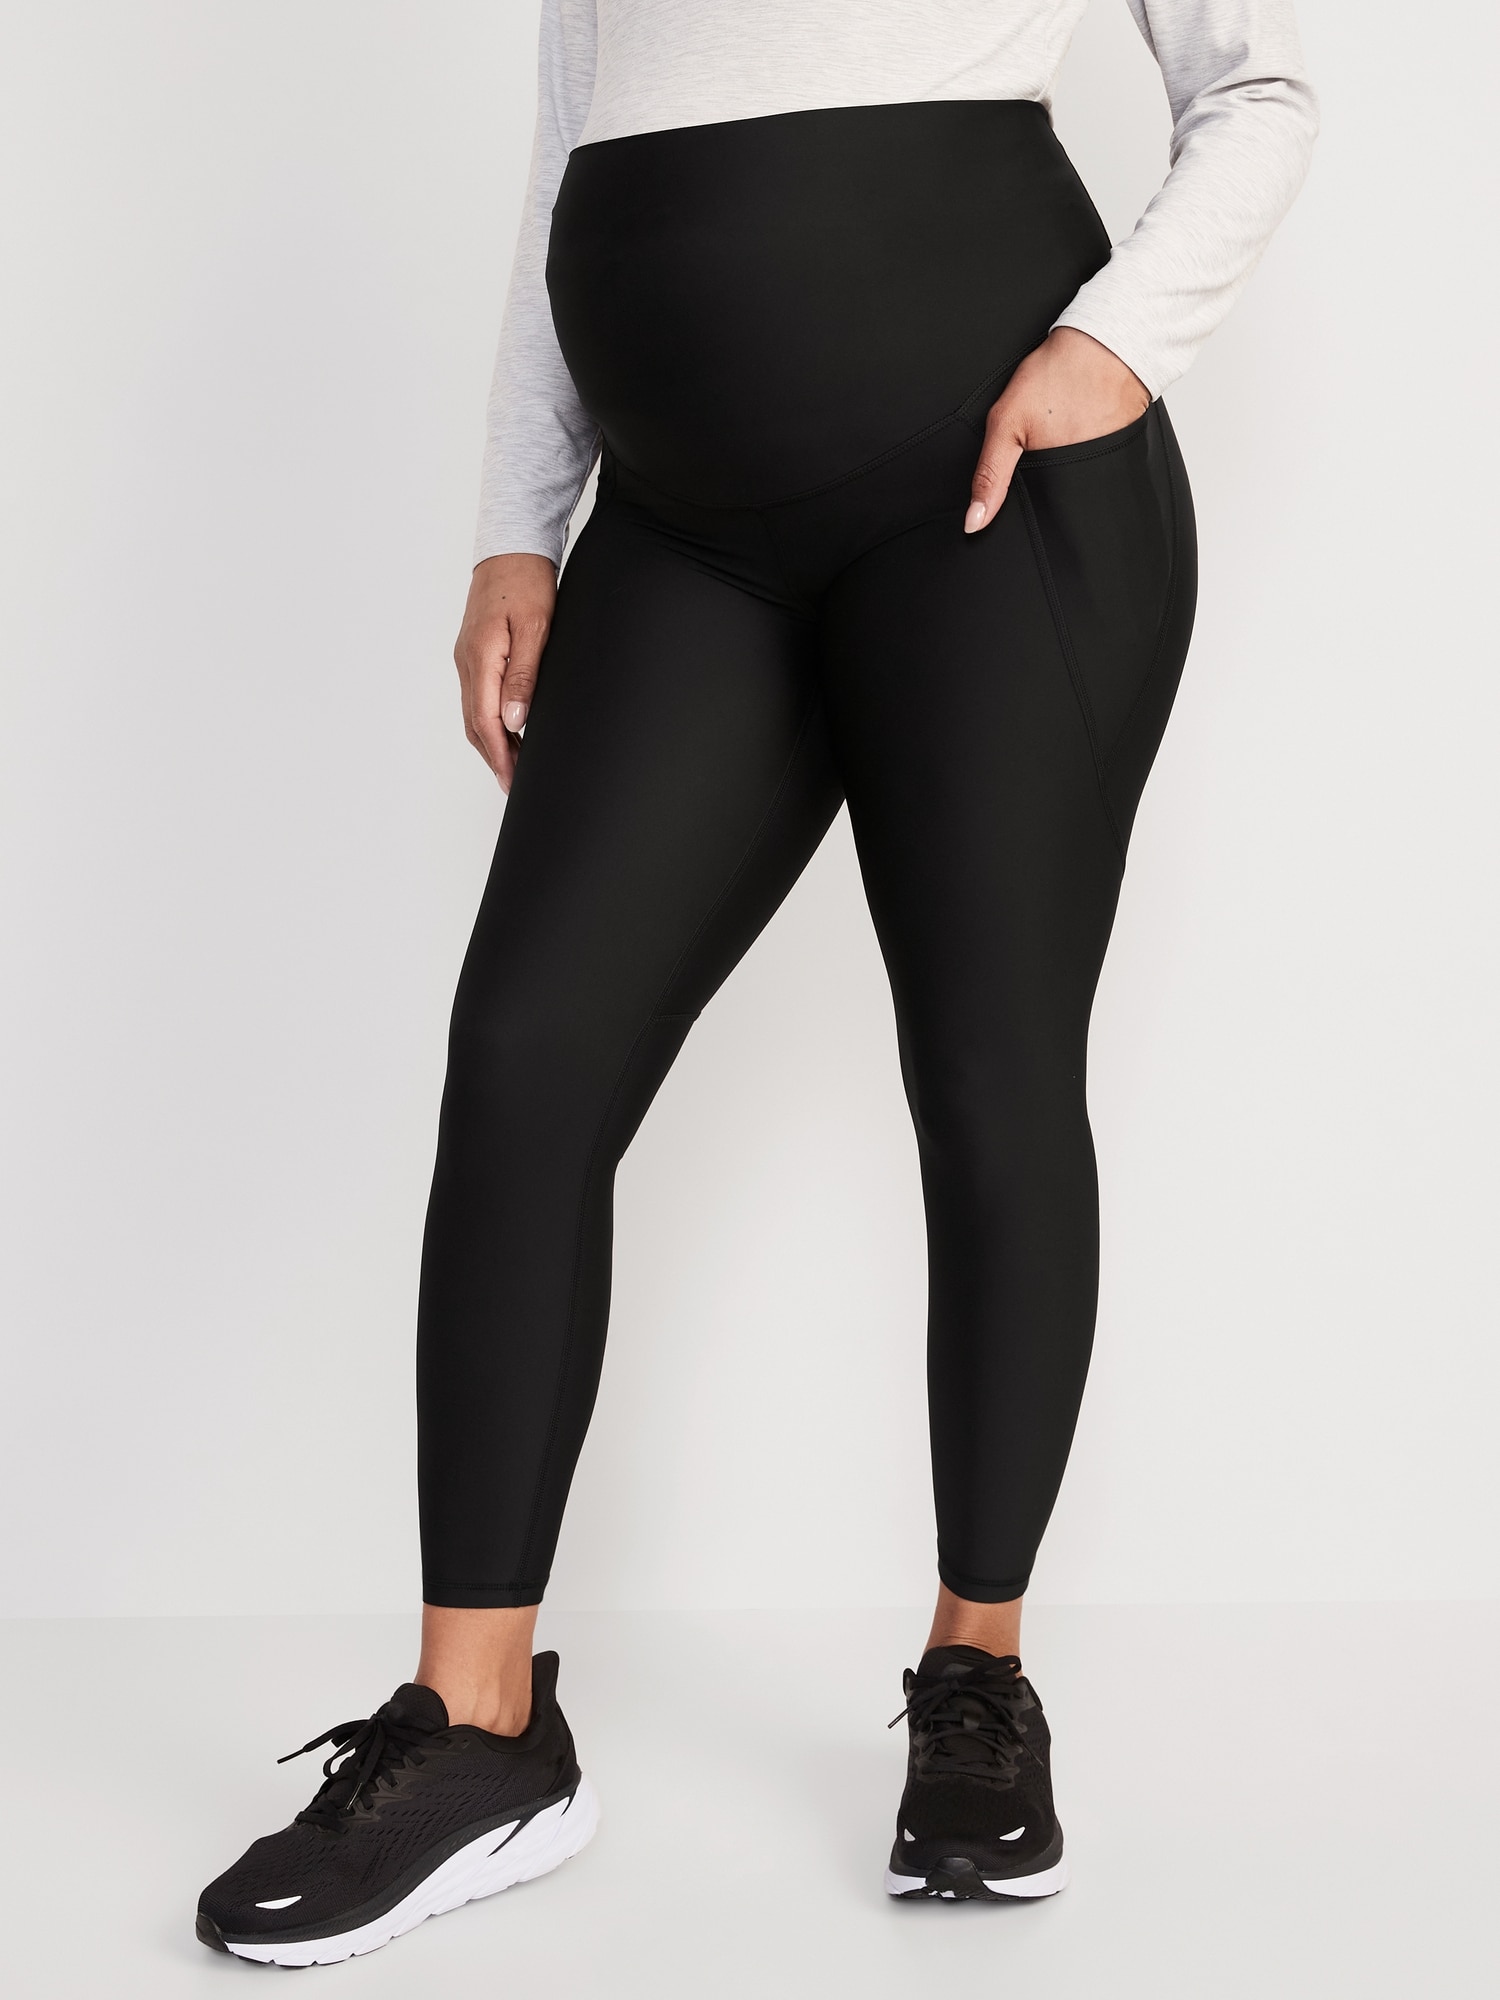 Gap Maternity leggings blackout technology | Gap maternity, Maternity  leggings, Clothes design